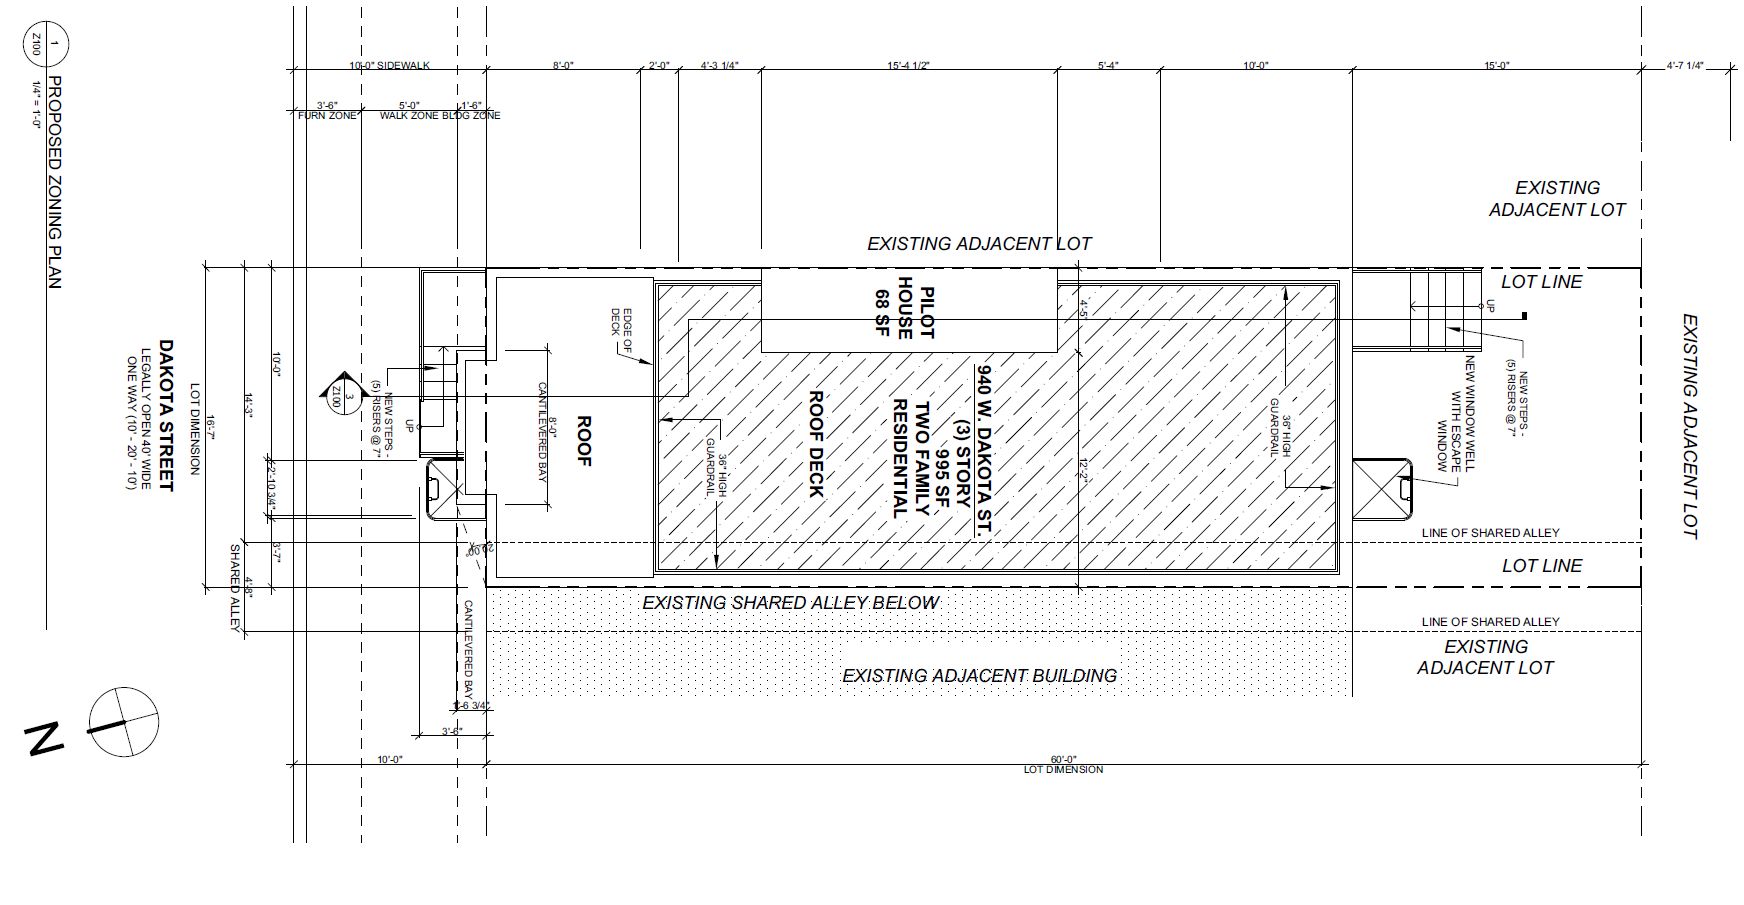 940 West Dakota Street. Site plan. Credit: T + Associates Architects via the City of Philadelphia